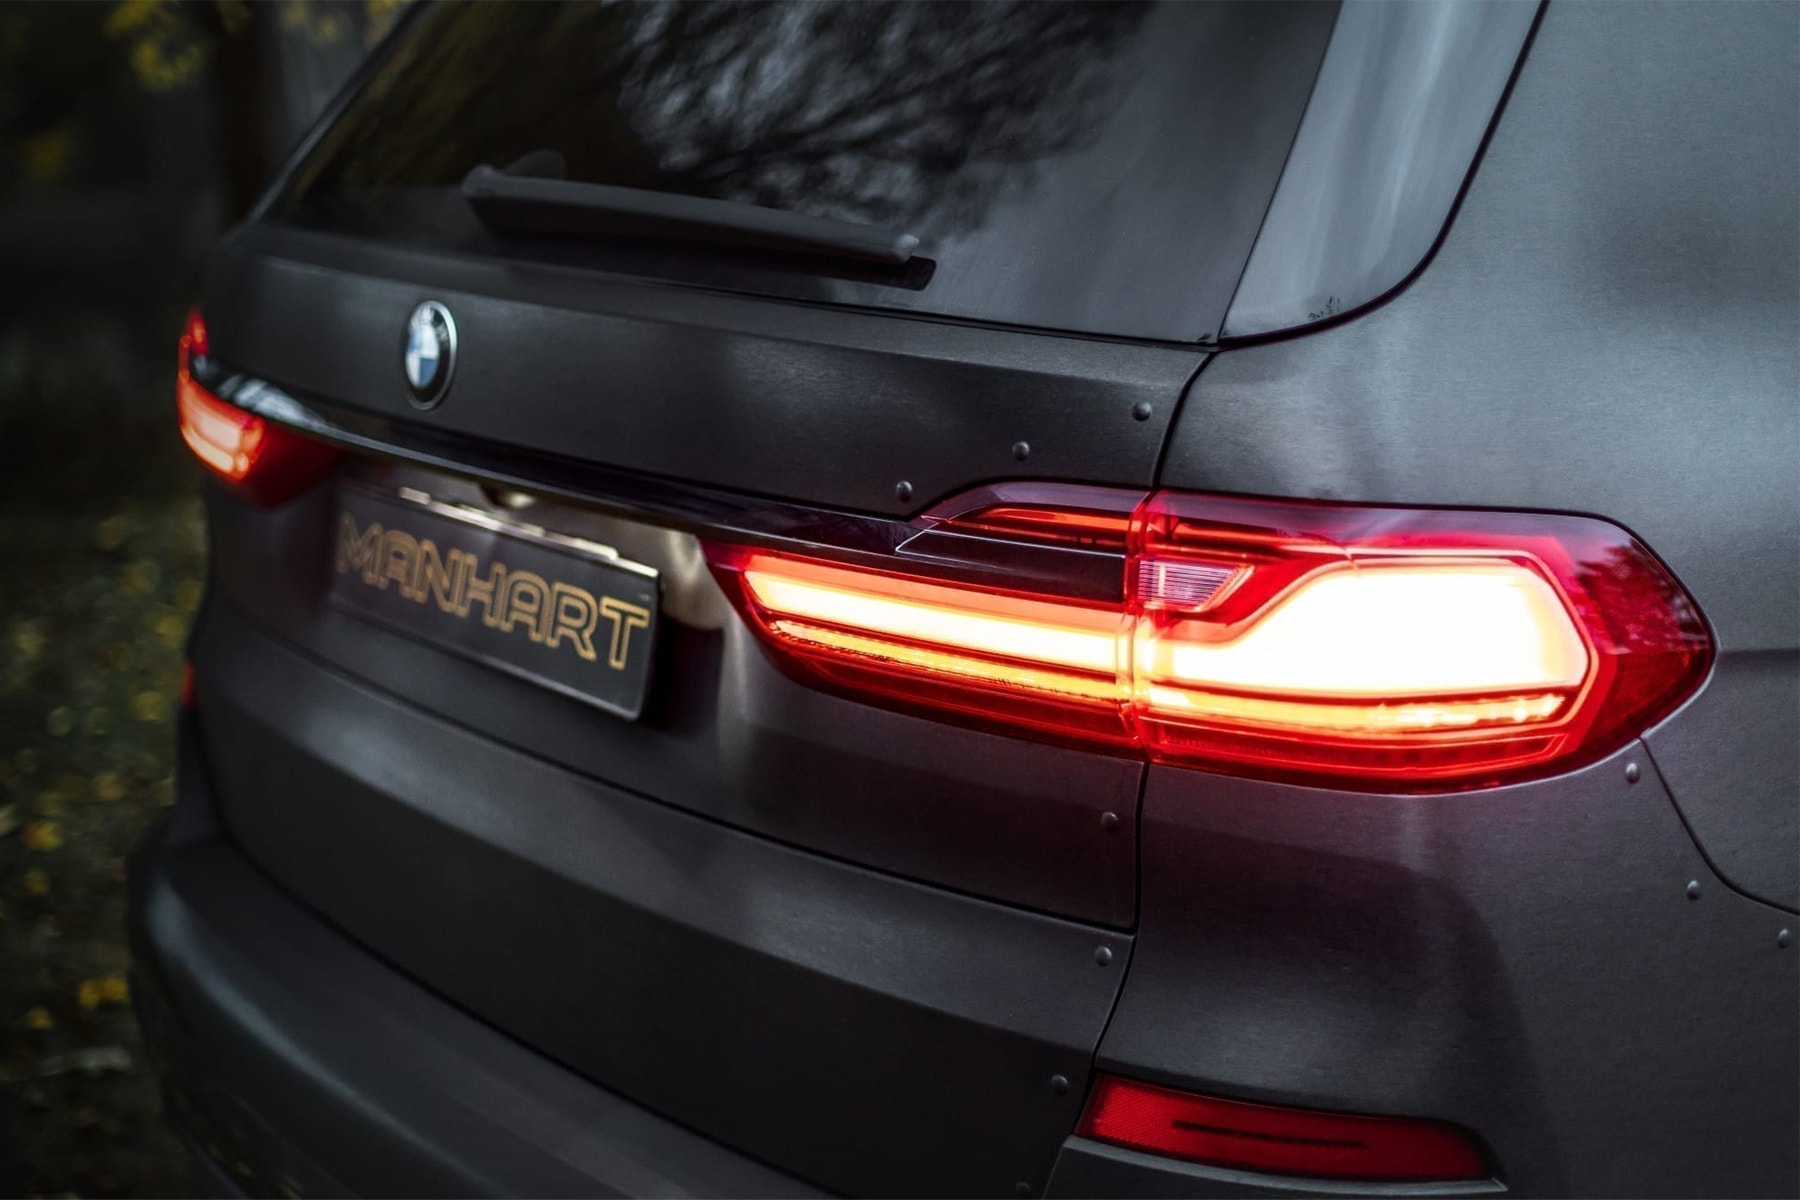 MANHART 打造 BMW X7 全新越野「Dirt Edition」改裝車型